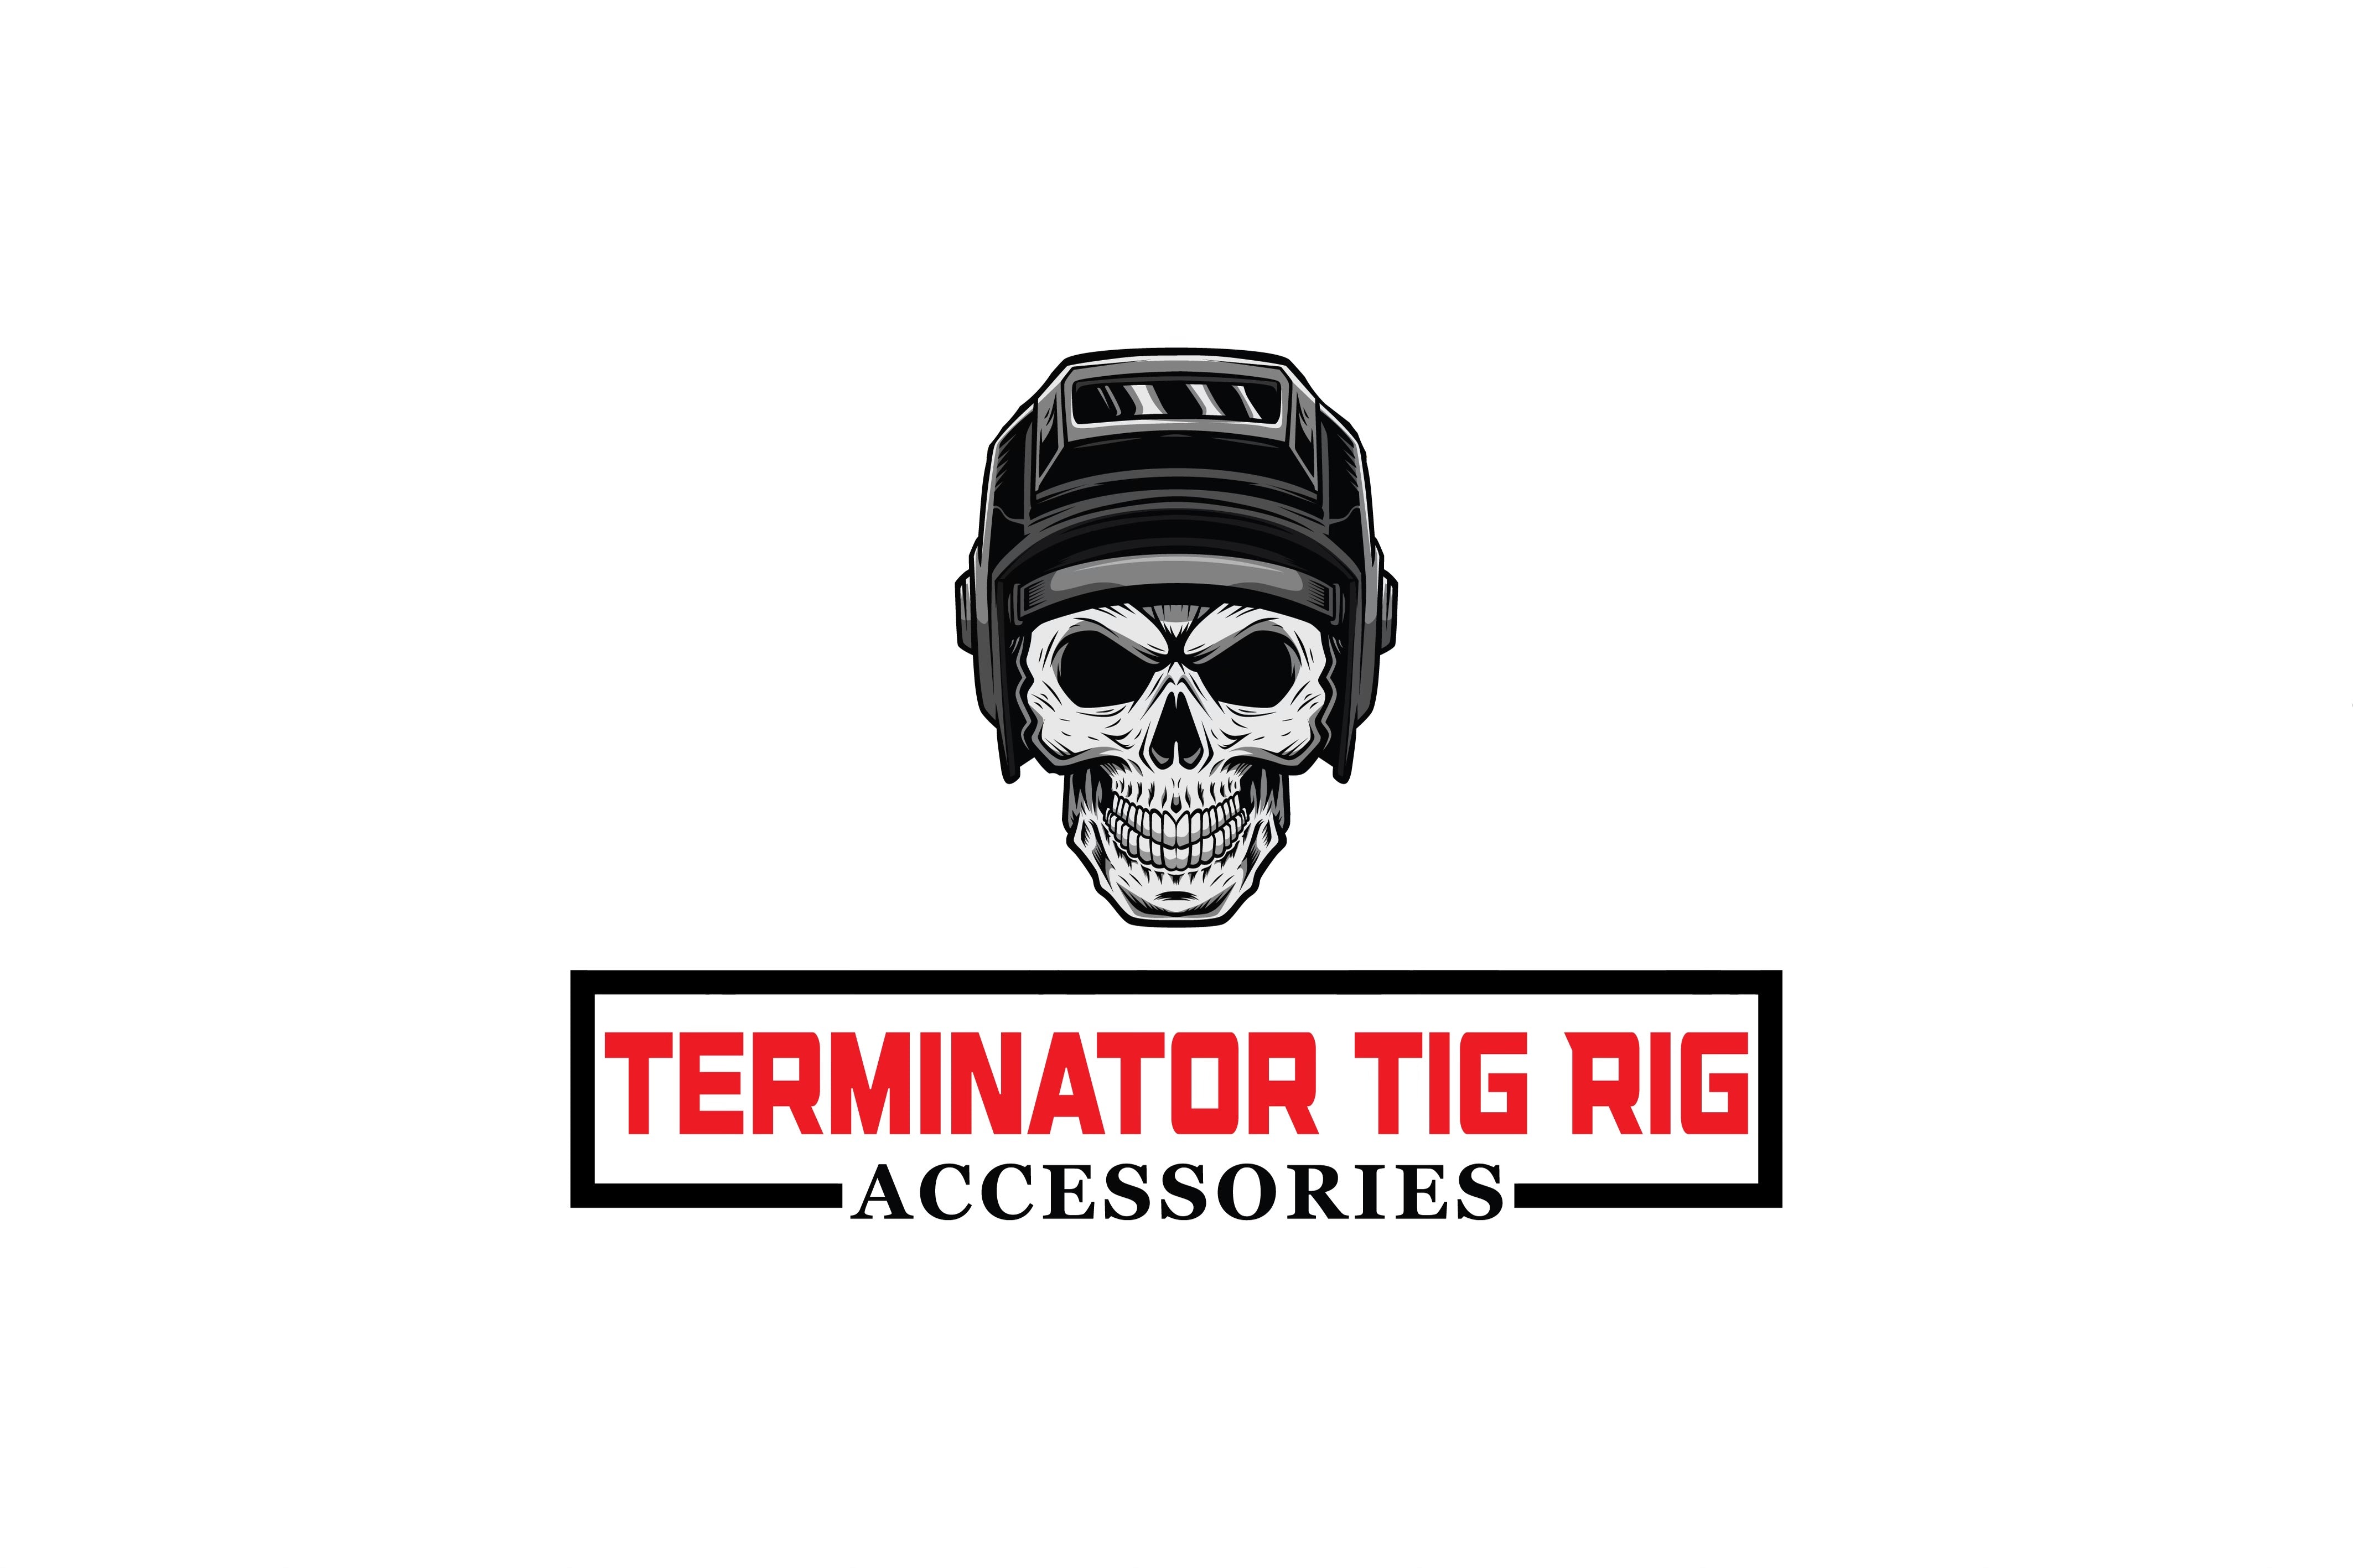 Terminator Tig Rig accessories